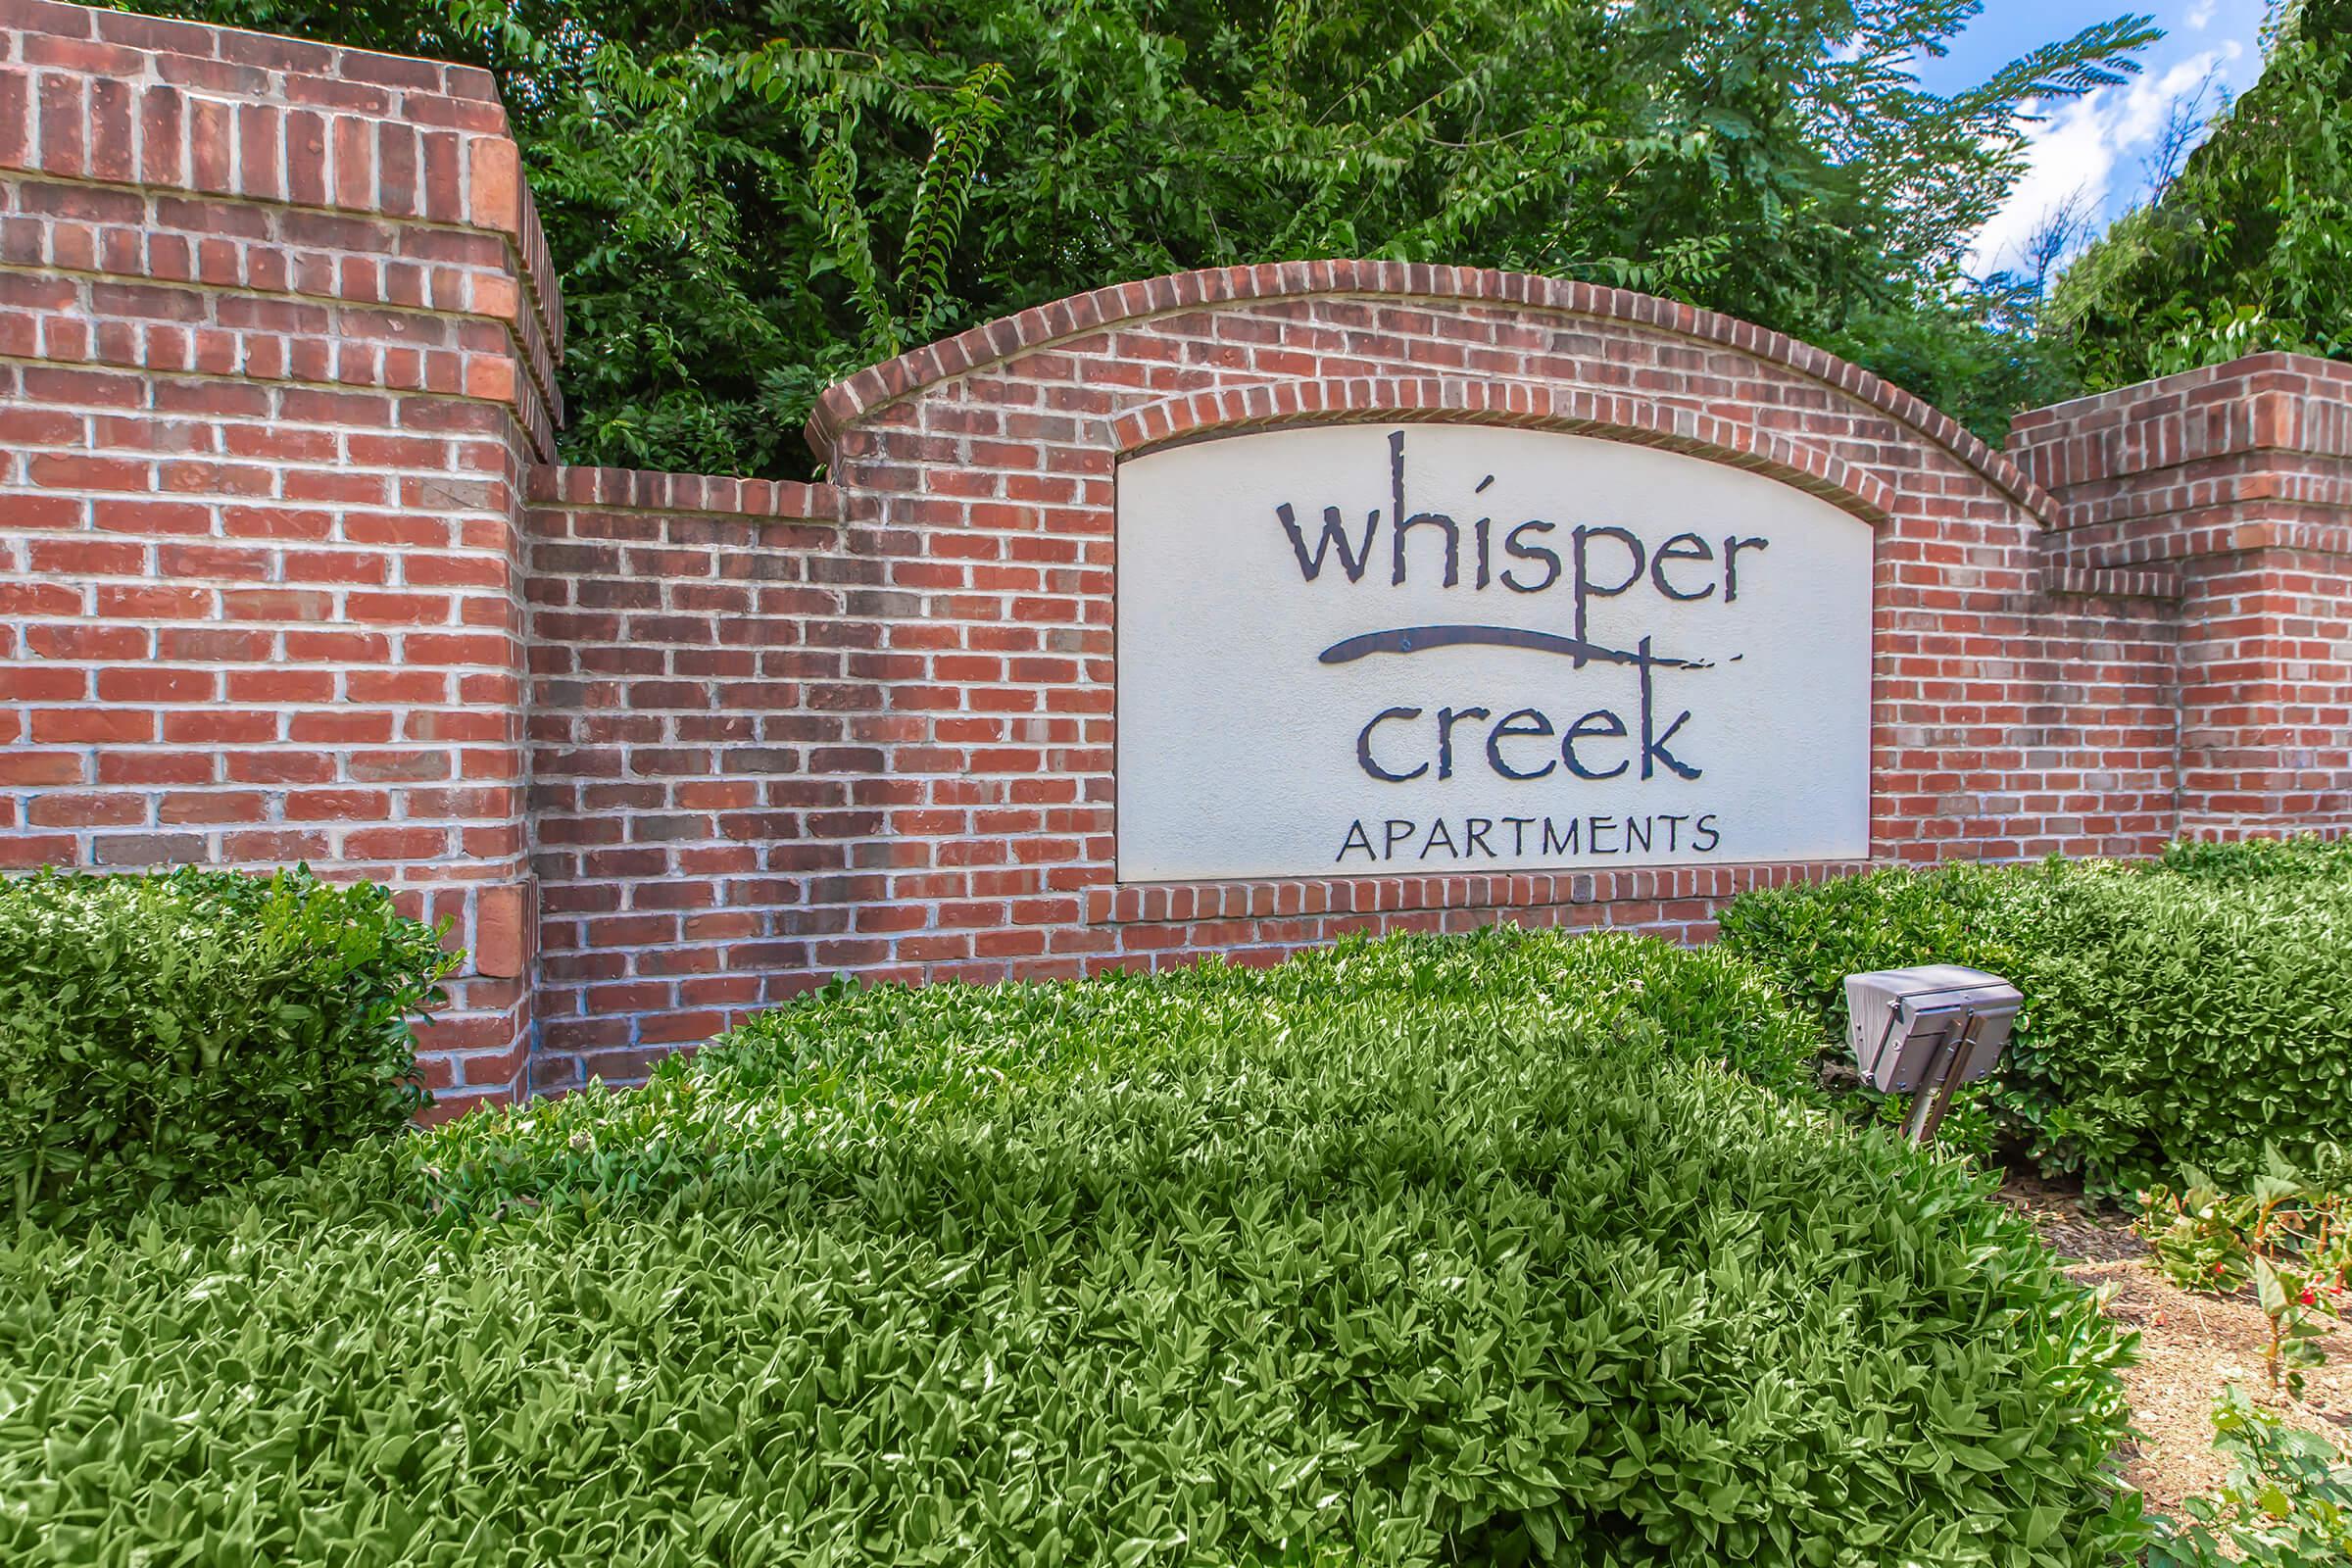 Main entrance at Whisper Creek in Rock Hill, SC.